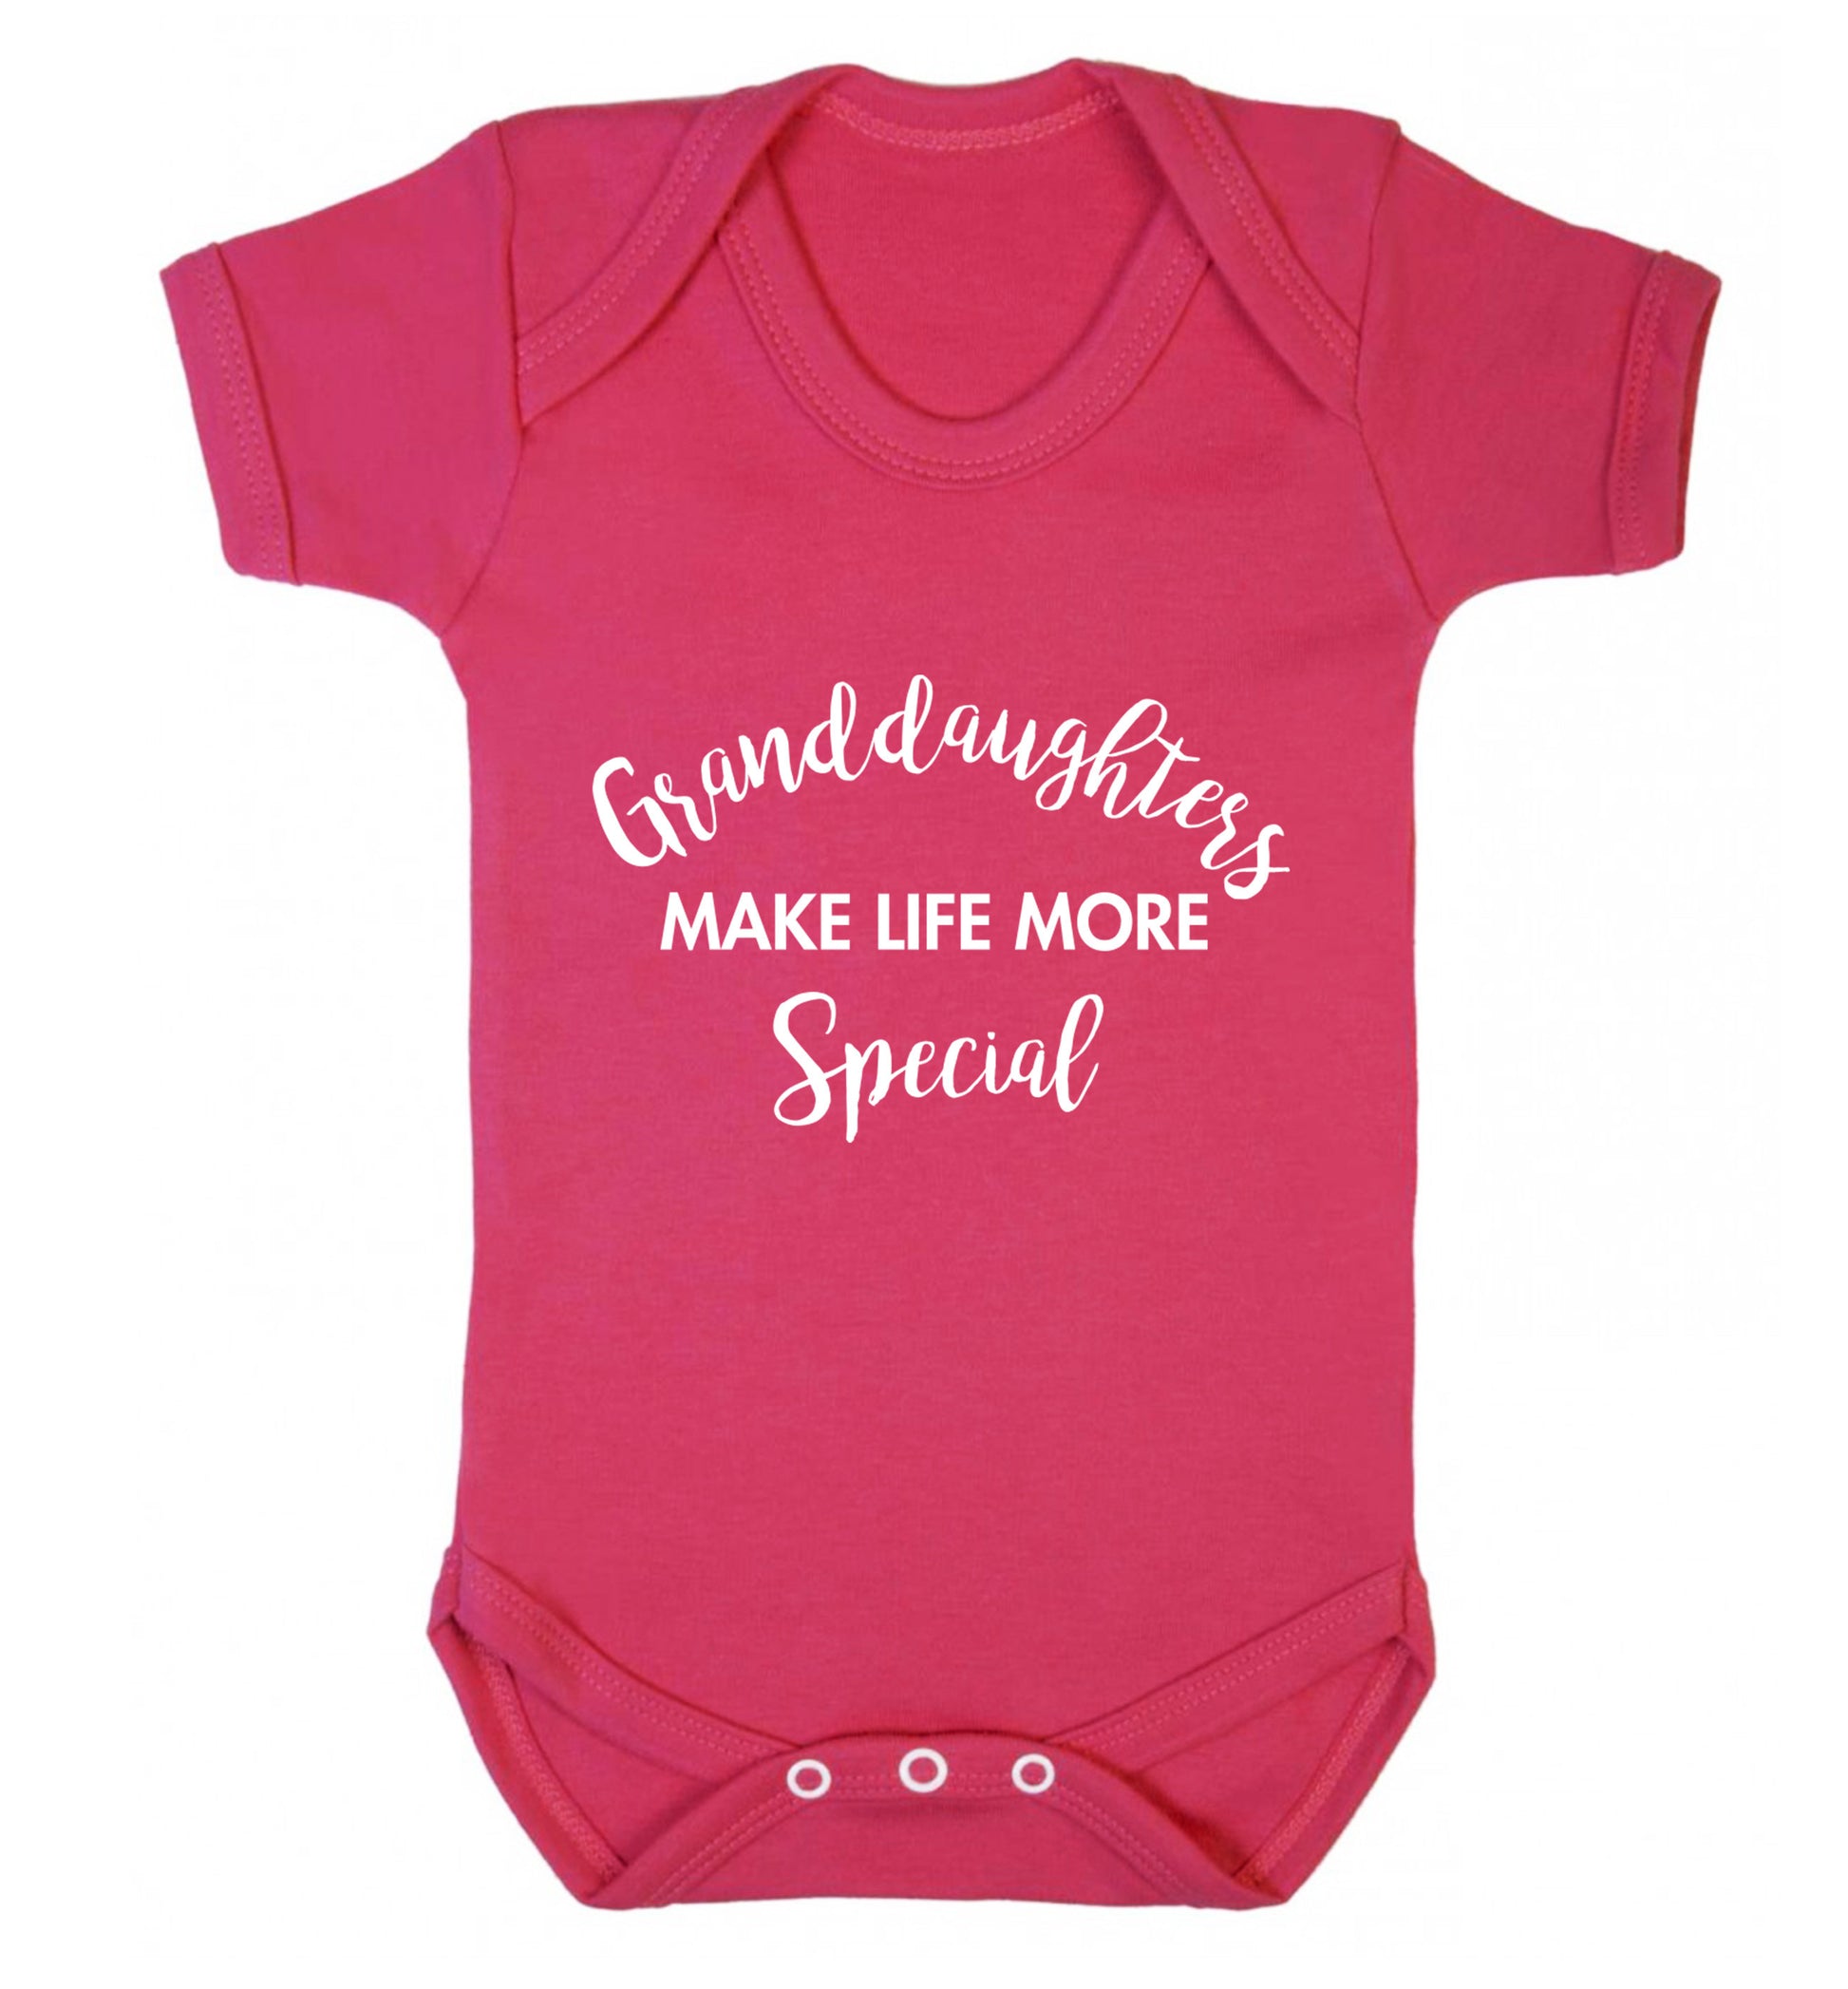 Granddaughters make life more special Baby Vest dark pink 18-24 months